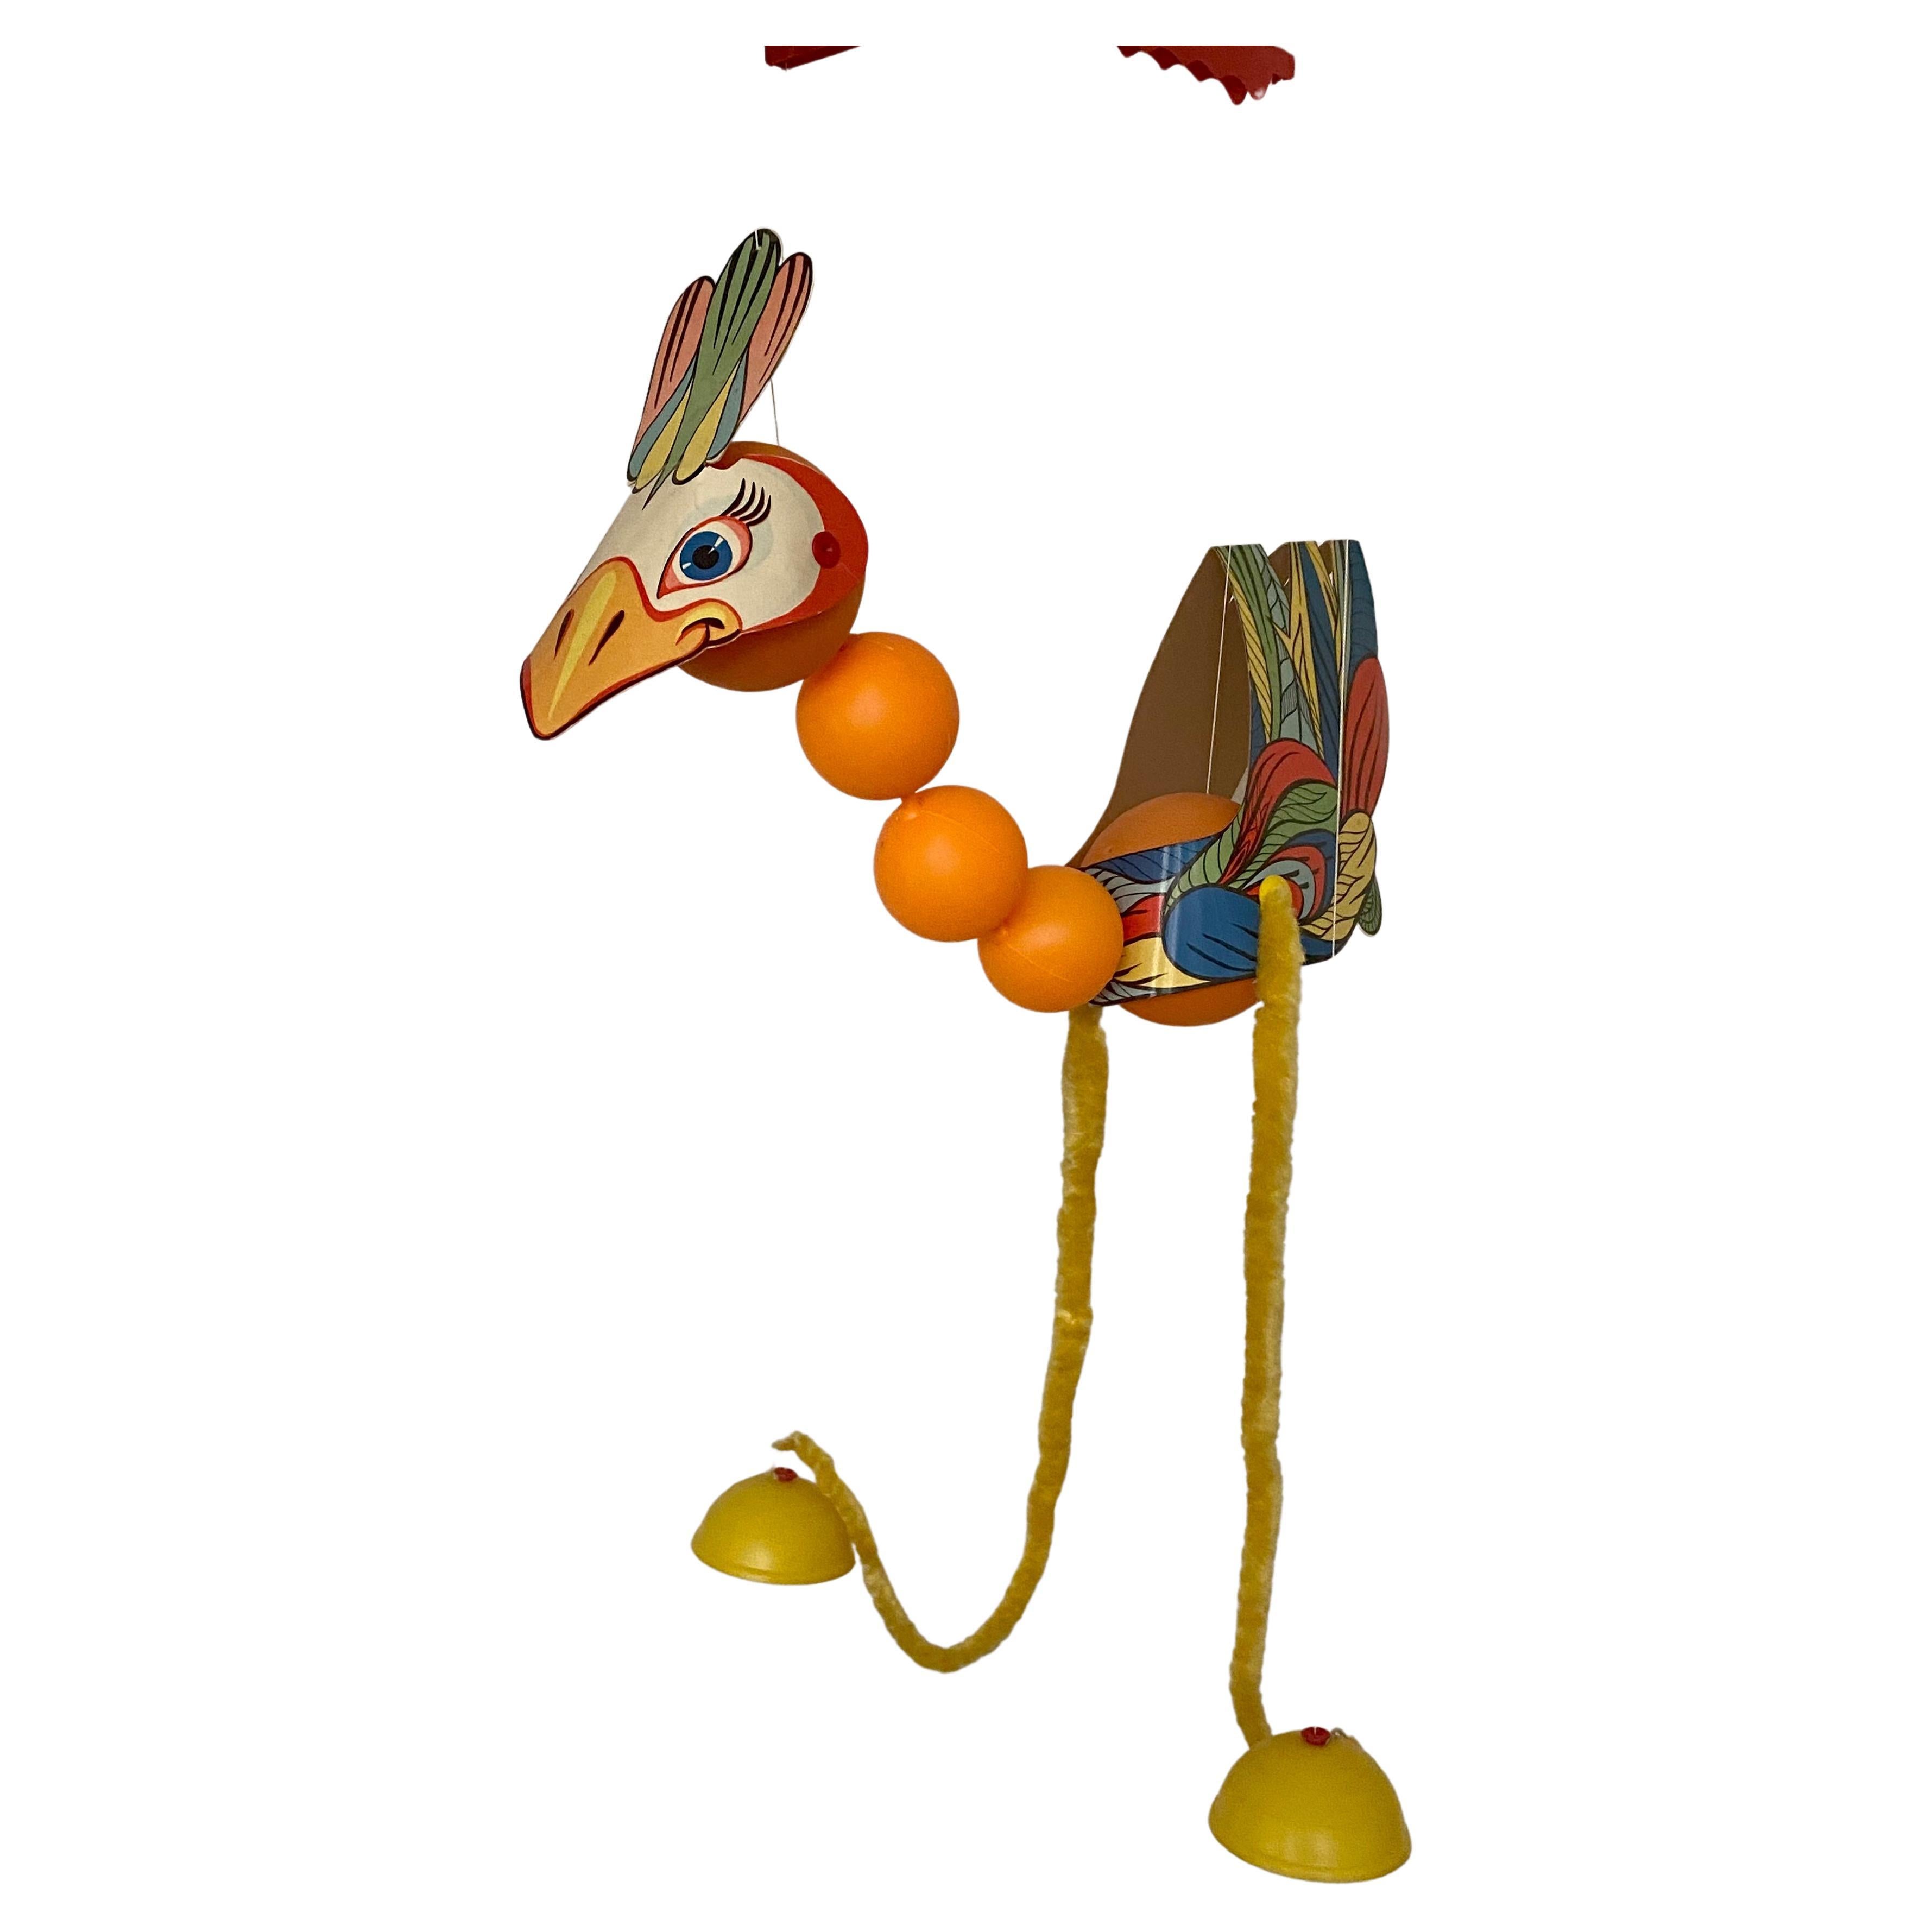 Loosi Goosi Marionette Bird by Palumbo Giocattoli, 1970s